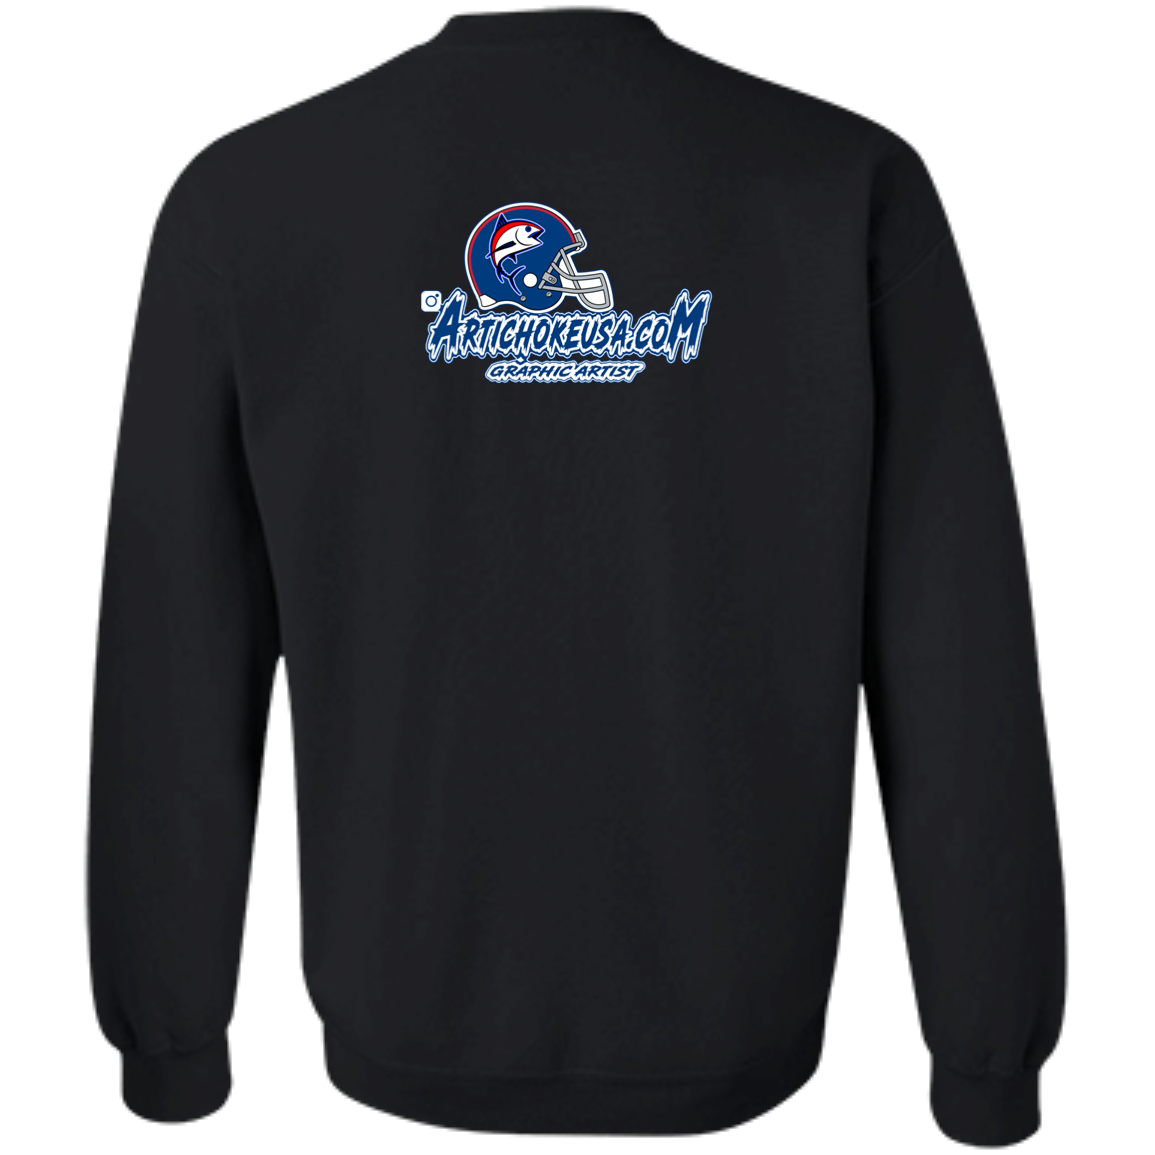 ArtichokeUSA Custom Design. The Big Tuna. Bill Parcell Tribute. NY Giants Fan Art. Crewneck Pullover Sweatshirt